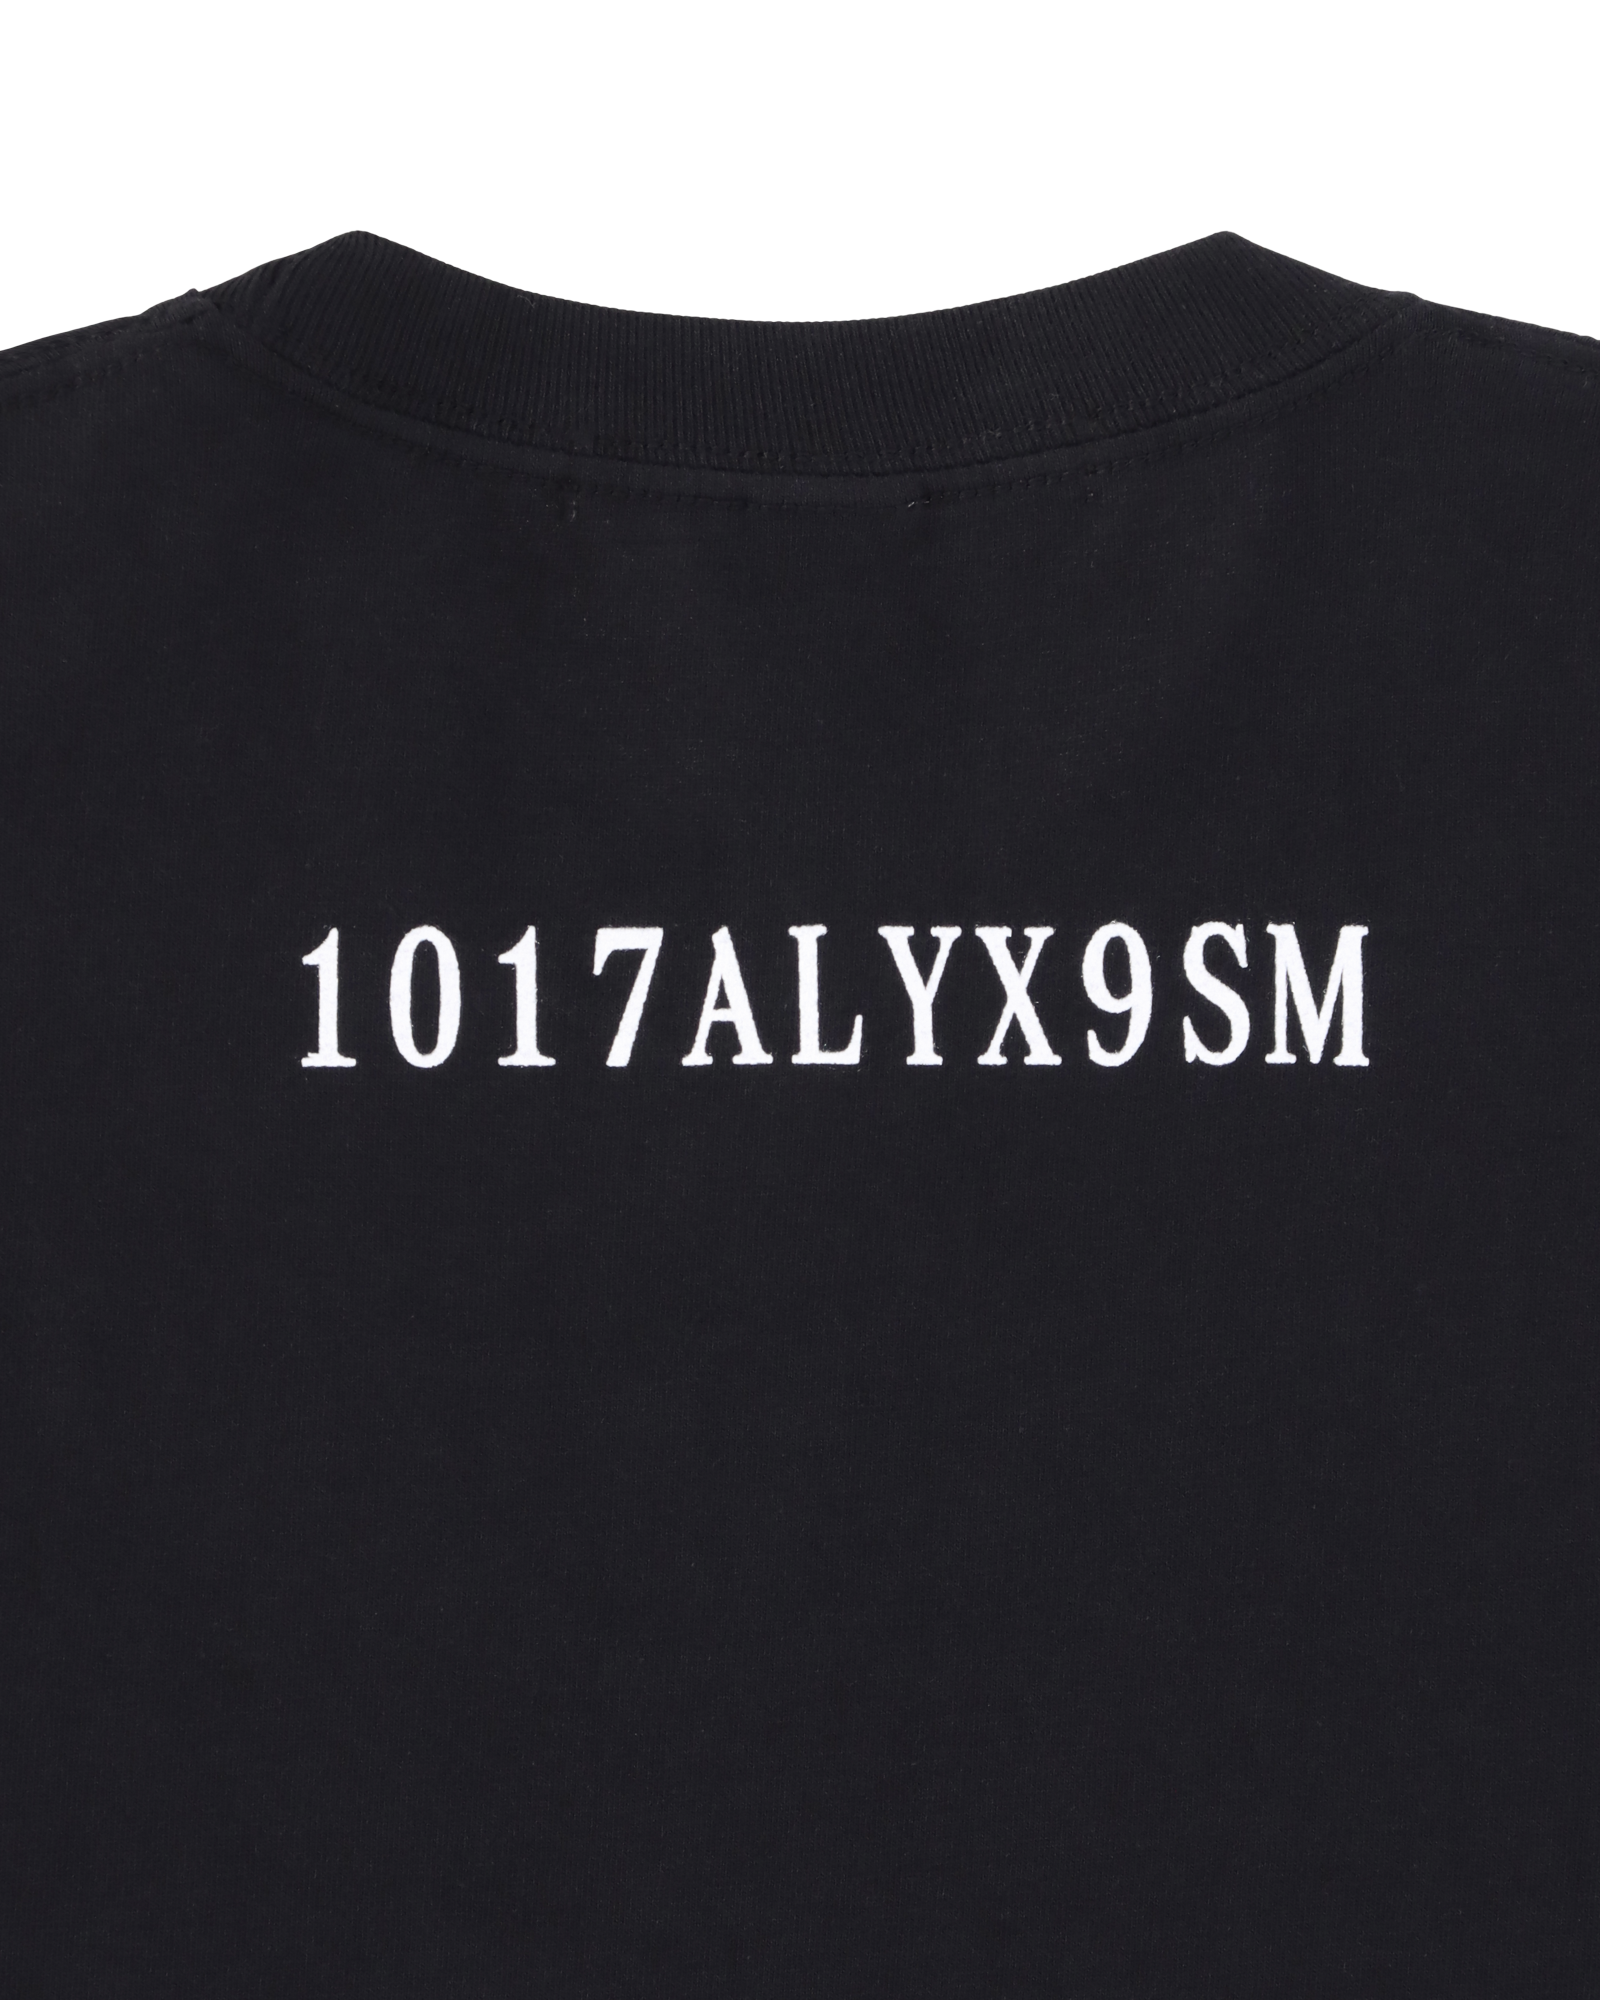 1017 ALYX 9SM COMPILATION V1 - SS T-Shirt